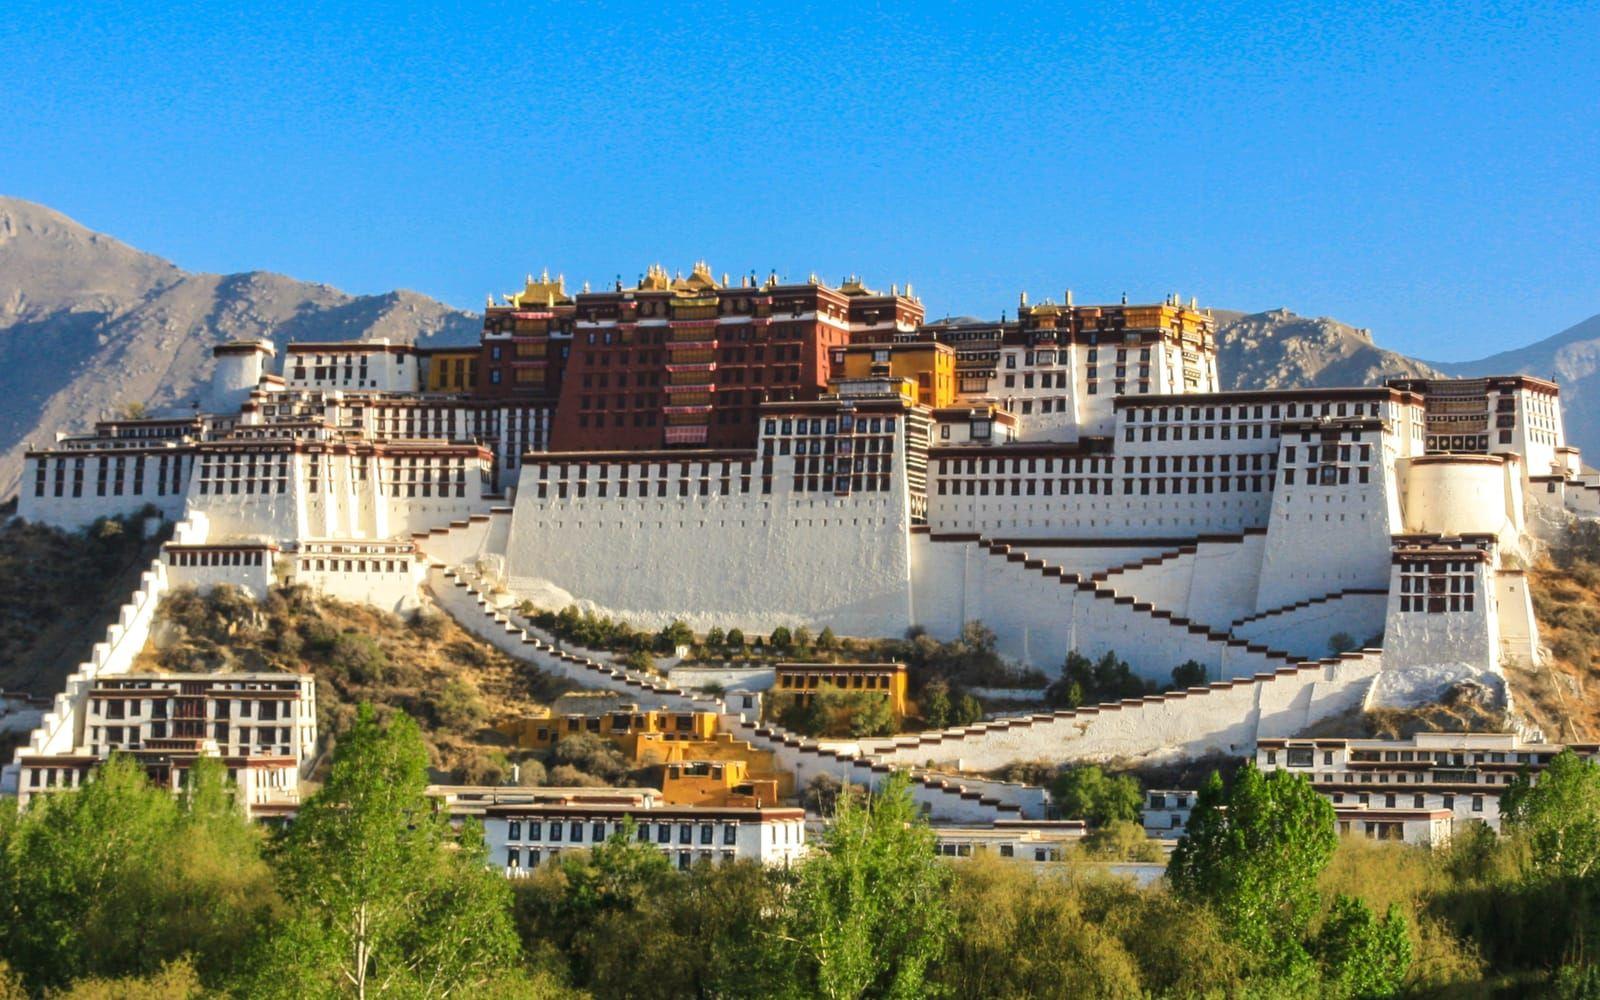 Mäktiga Potalapalatset i Lhasa. Här bodde tidigare Dalai Lama.